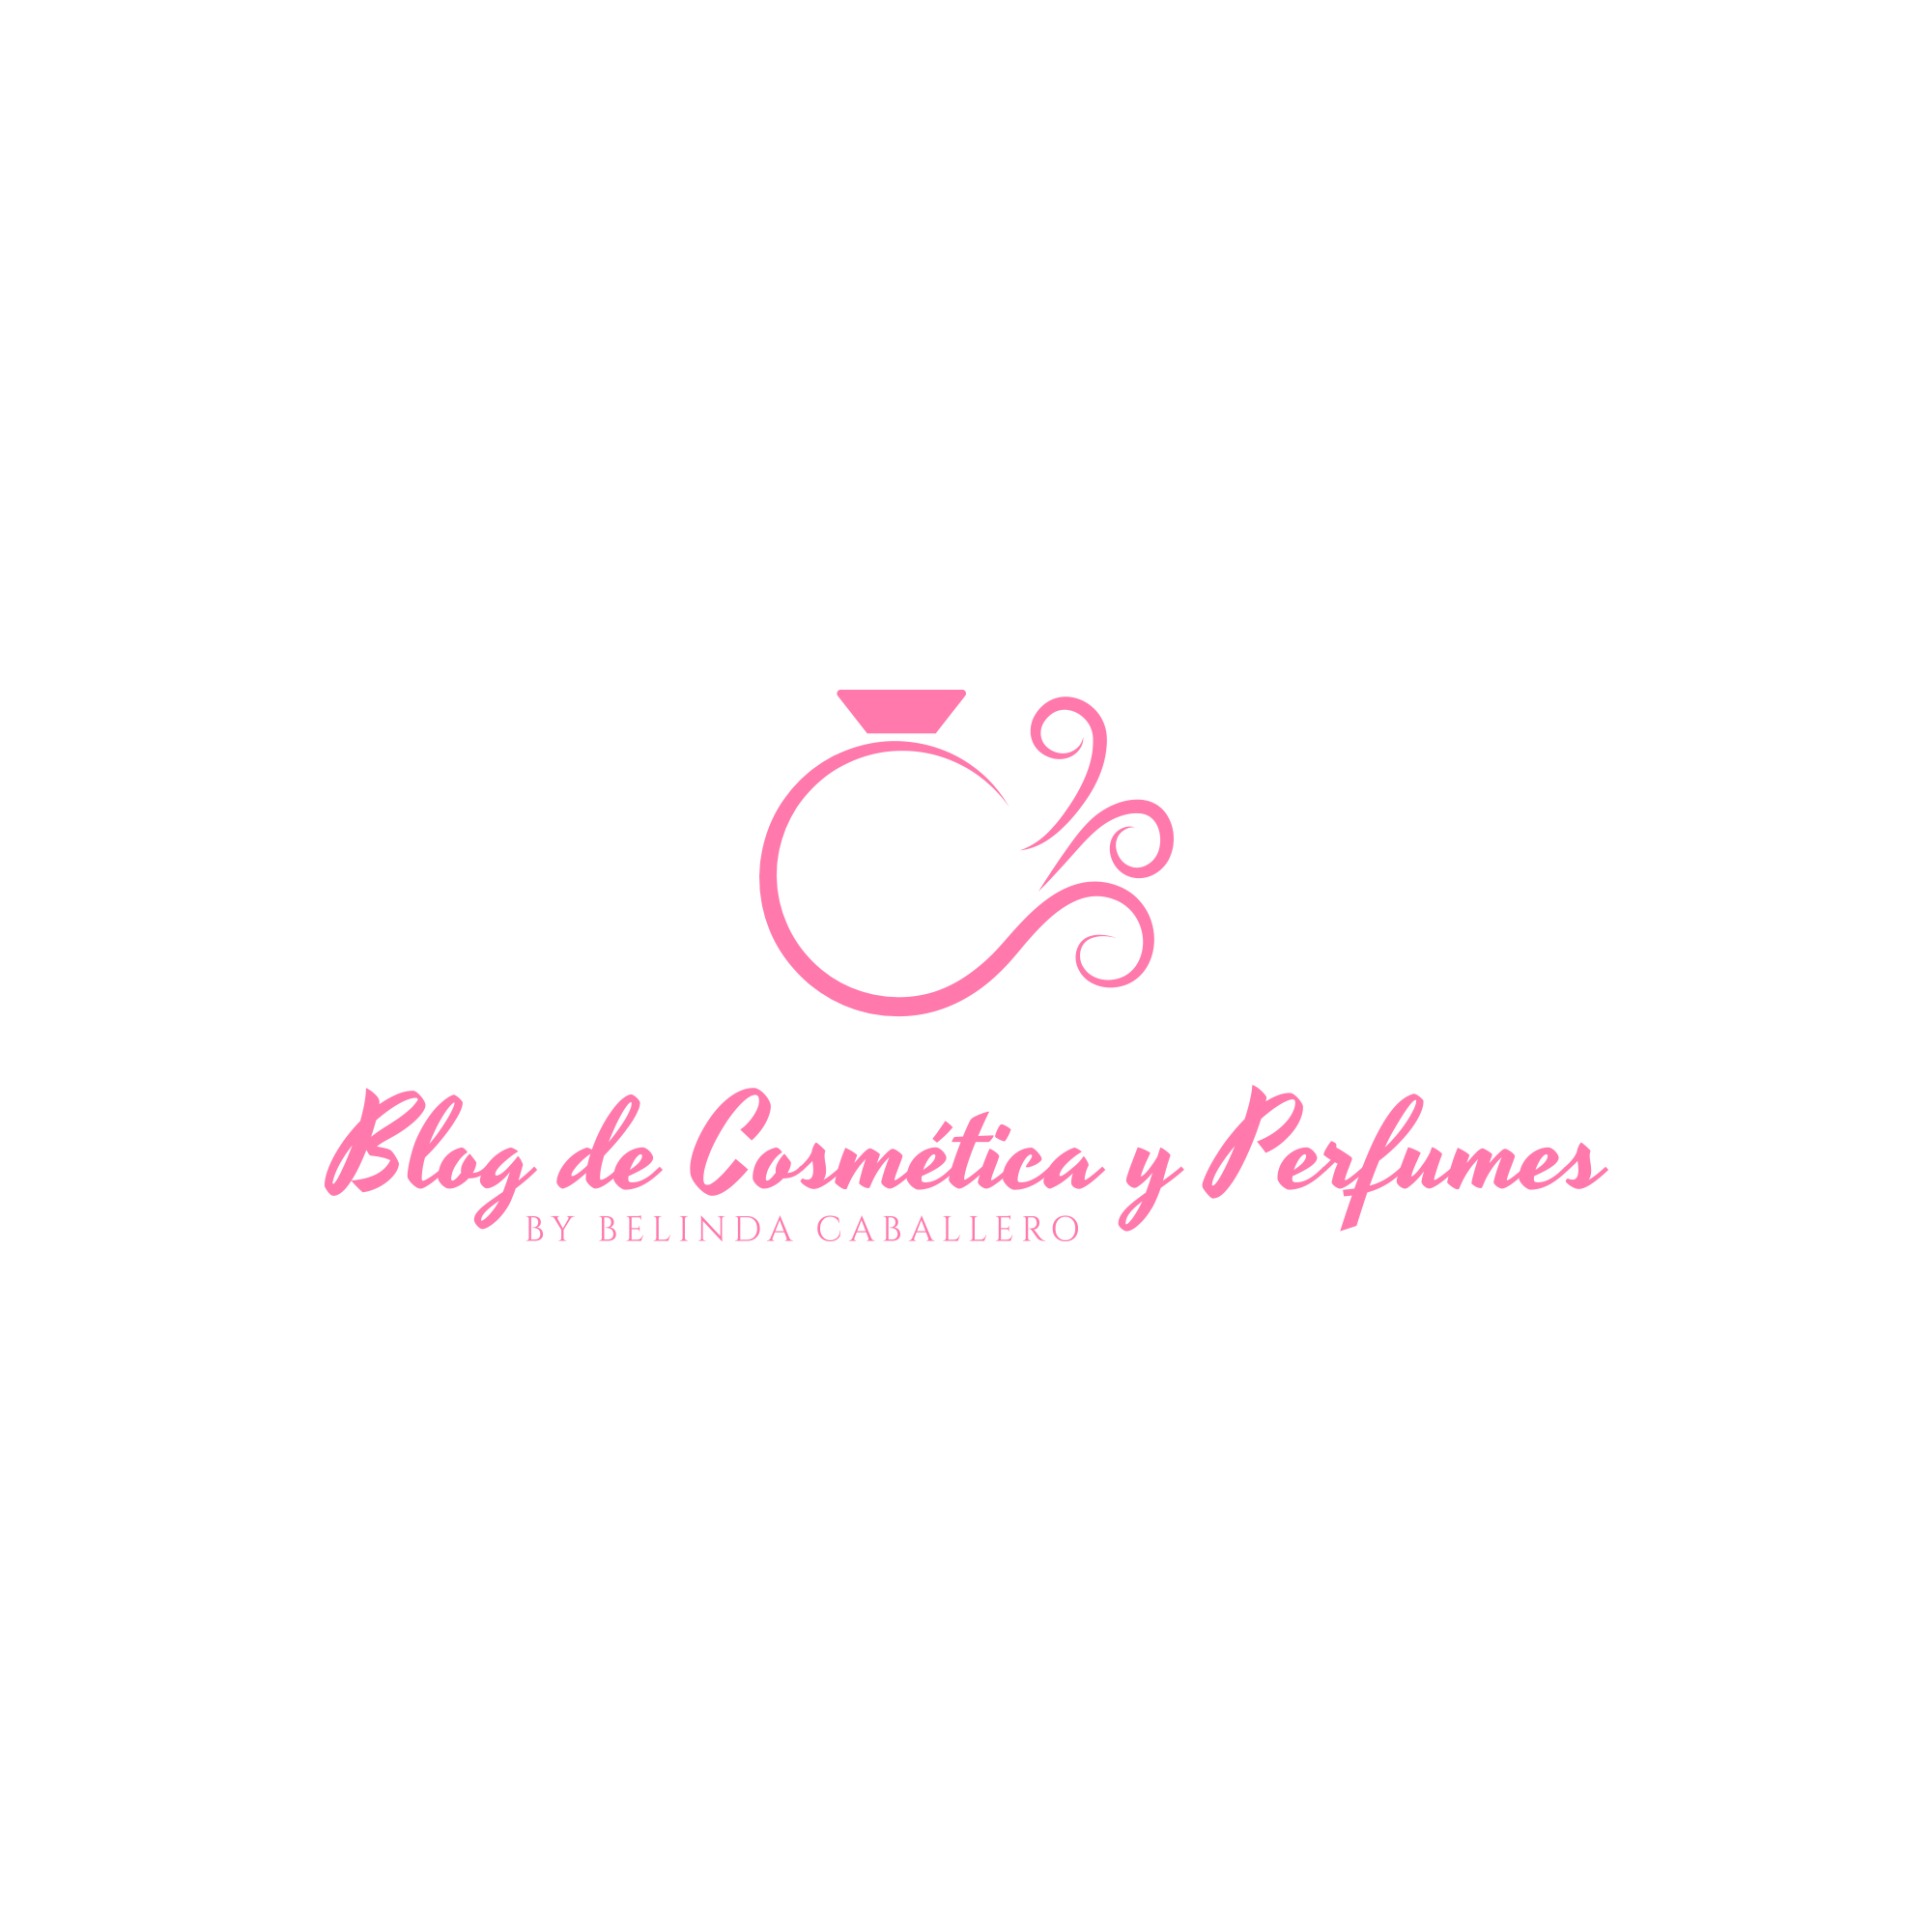 (c) Blogcosmeticaperfumes.com